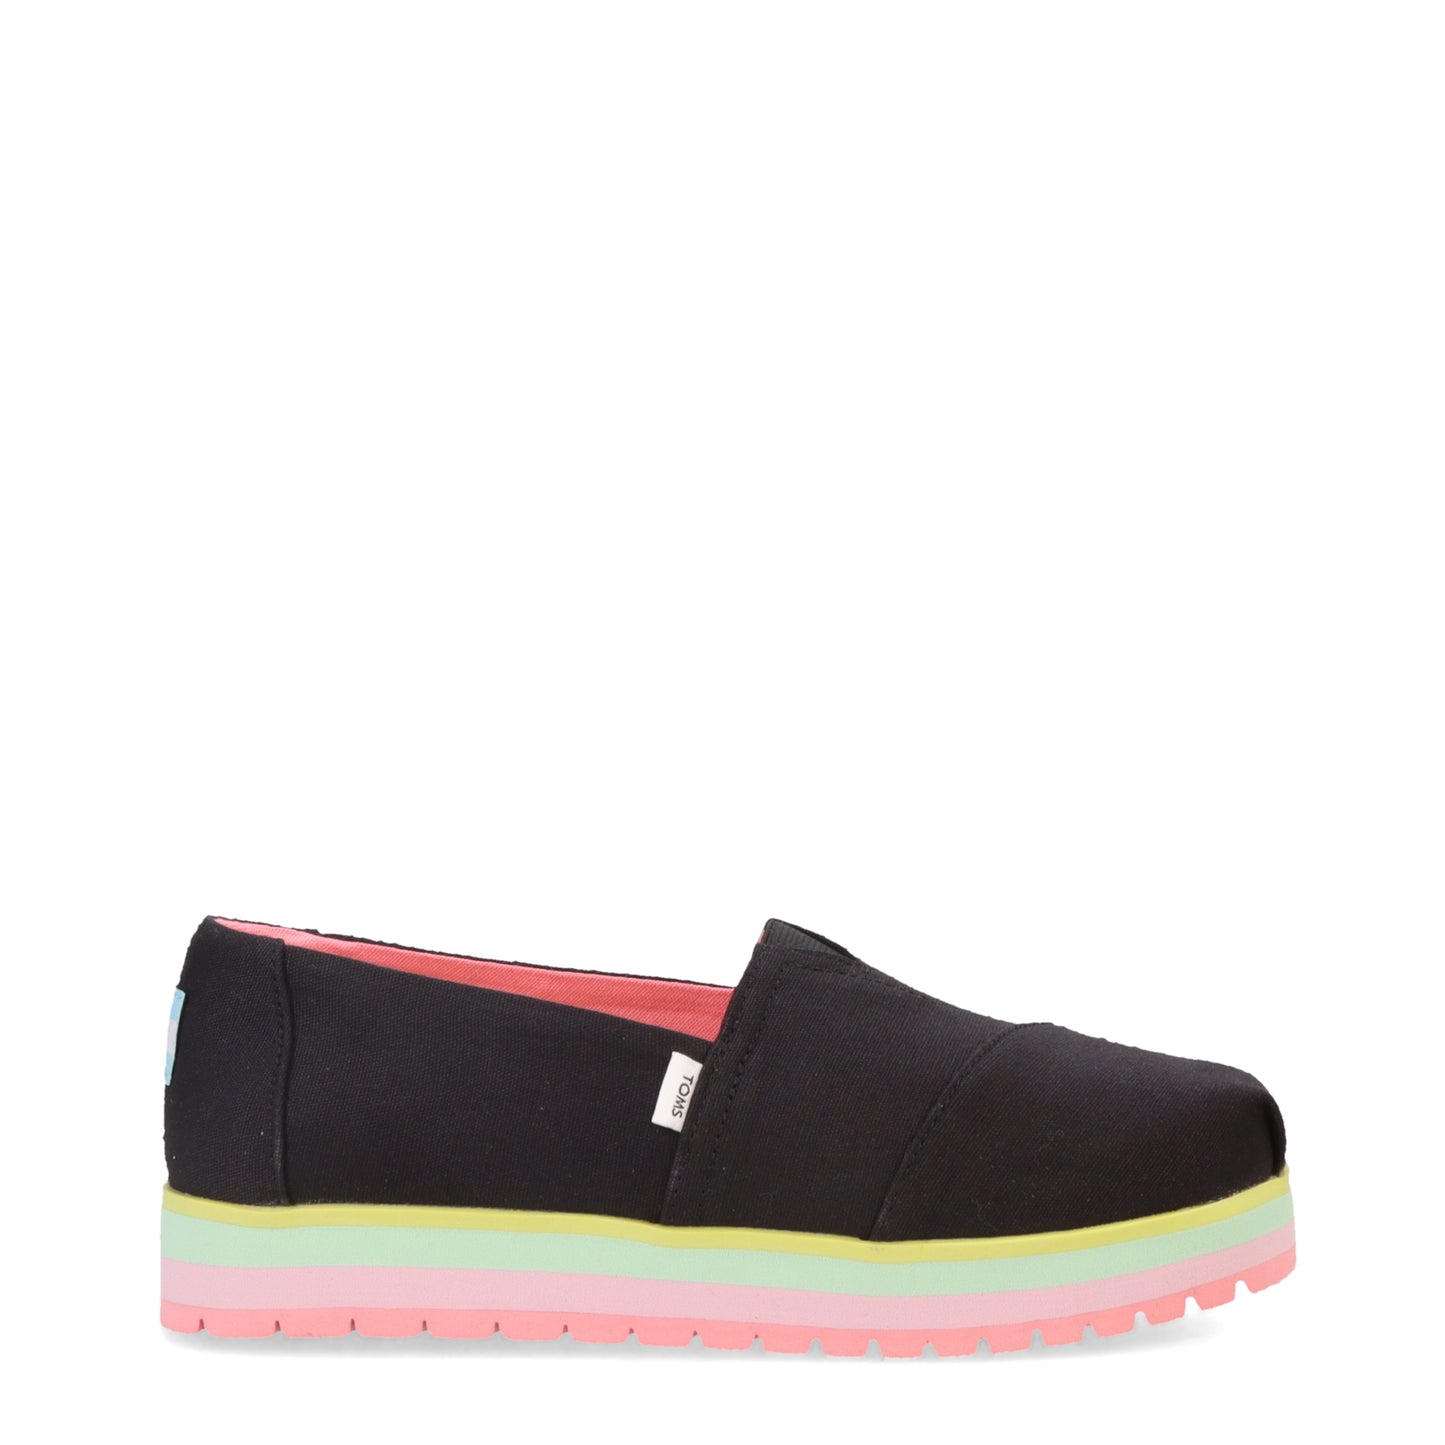 Peltz Shoes  Girl's Toms Alpargata Platform Slip-On - Little Kid & Big Kid Black Pastel Multi 10019784-001